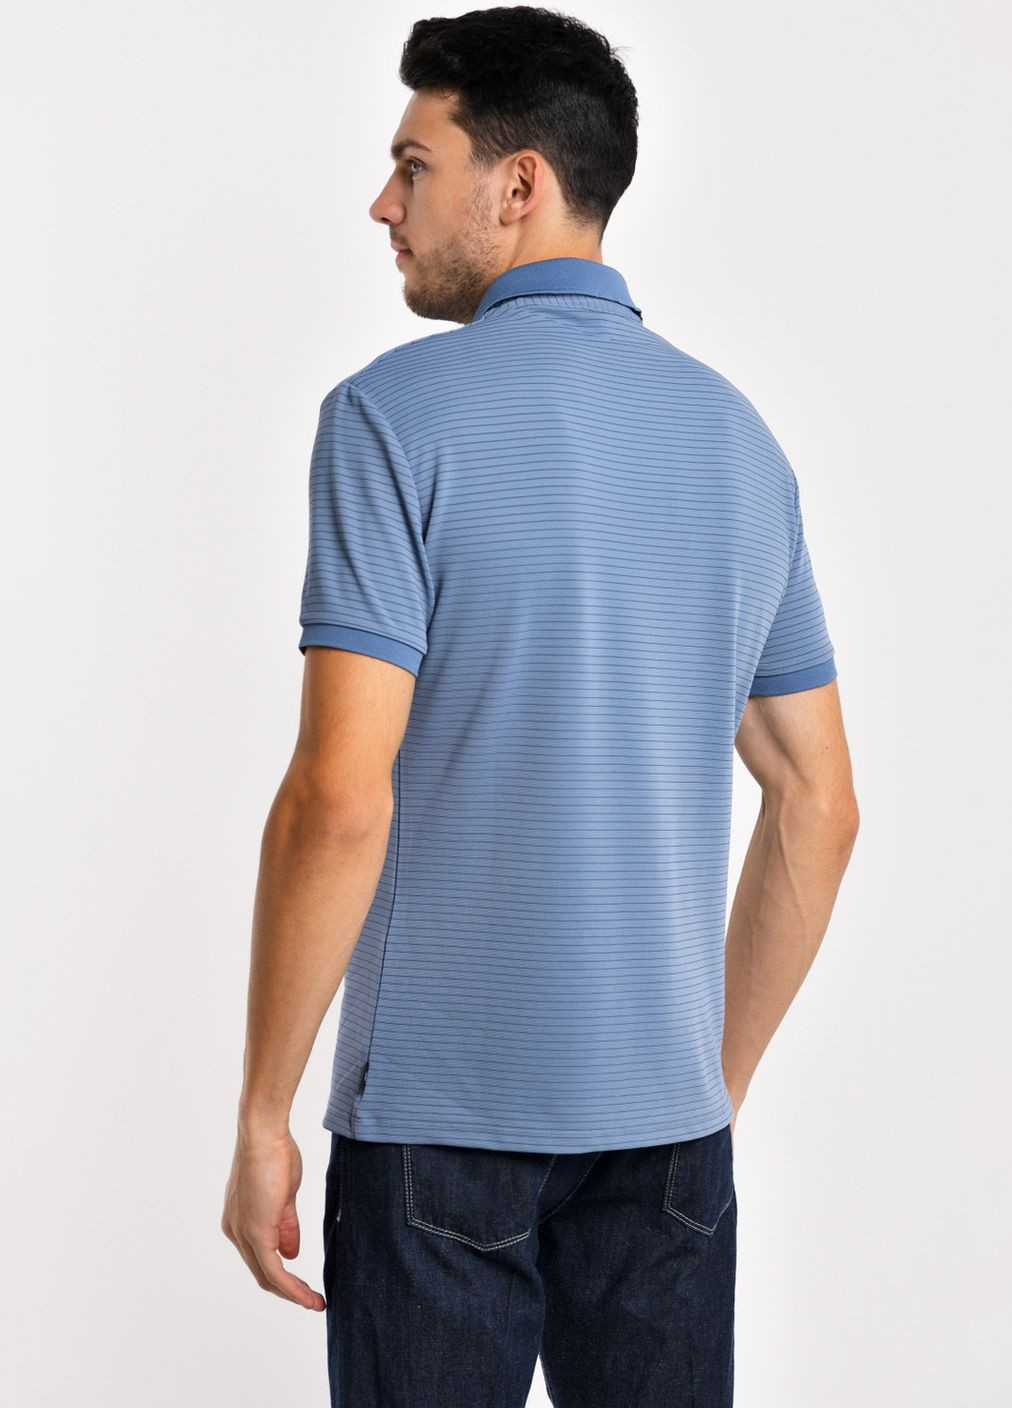 Голубой футболка-поло для мужчин Emporio Armani